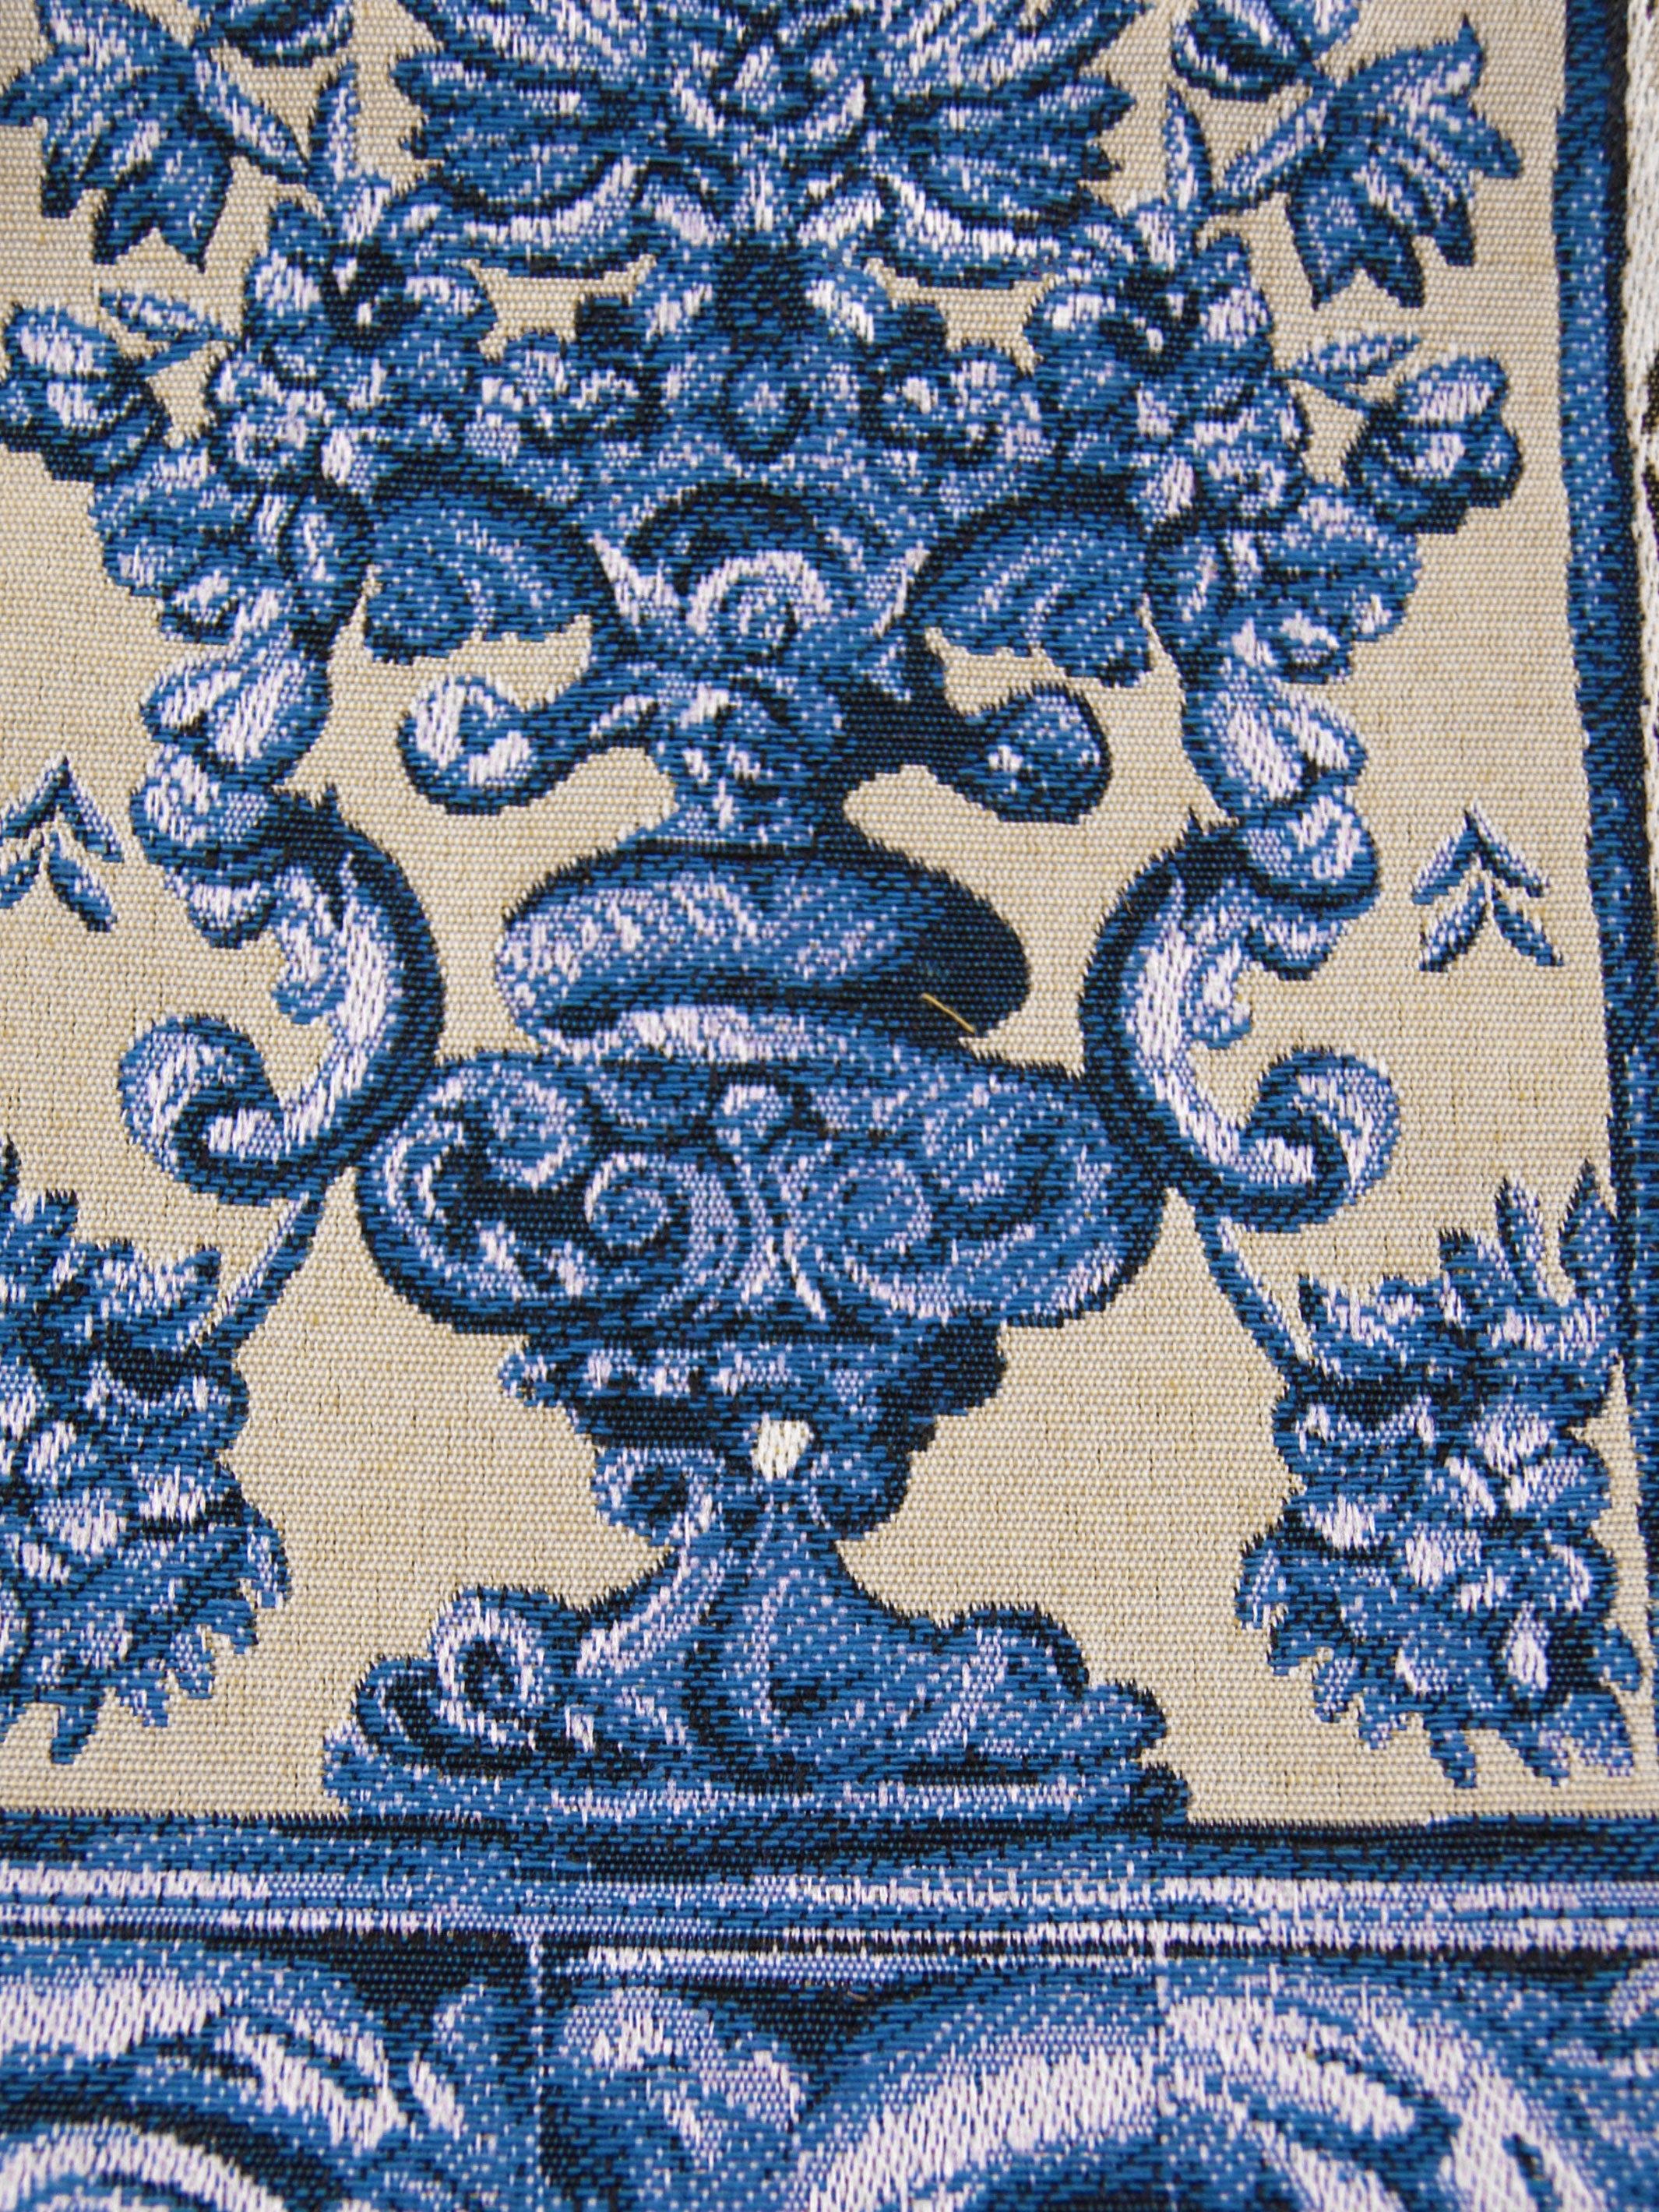 Handmade Blue and Yellow Portuguese Tiles Handbag Purse